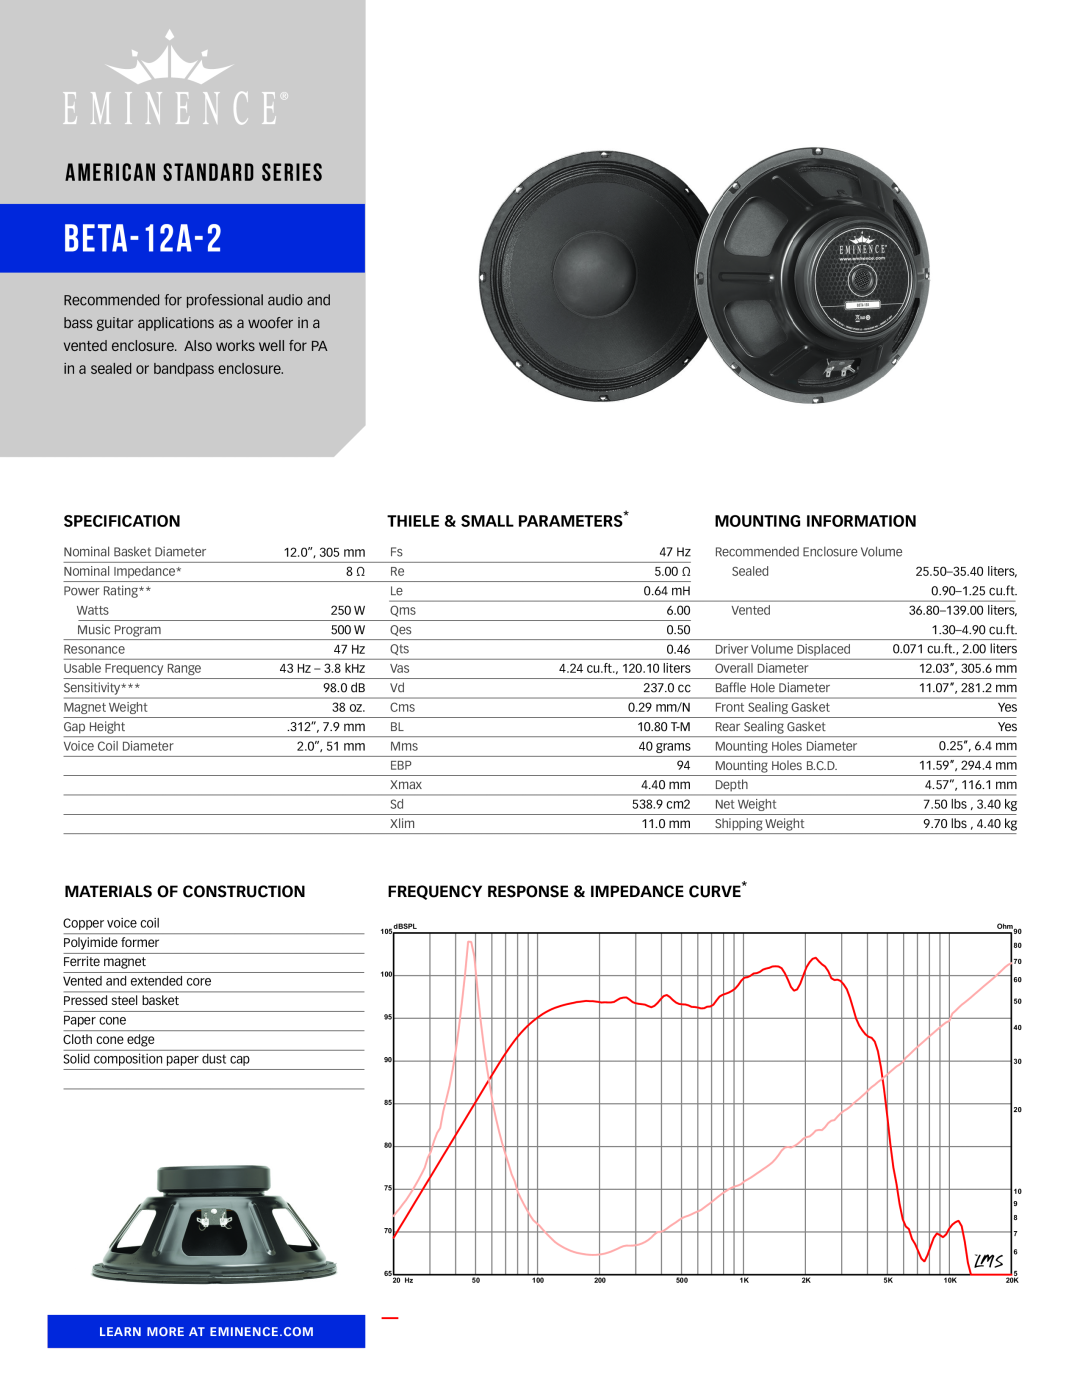 Eminence Speaker BETA12A manual BETA-12A-2, American Standard Series, SPL vs Freq, otes, Specification 